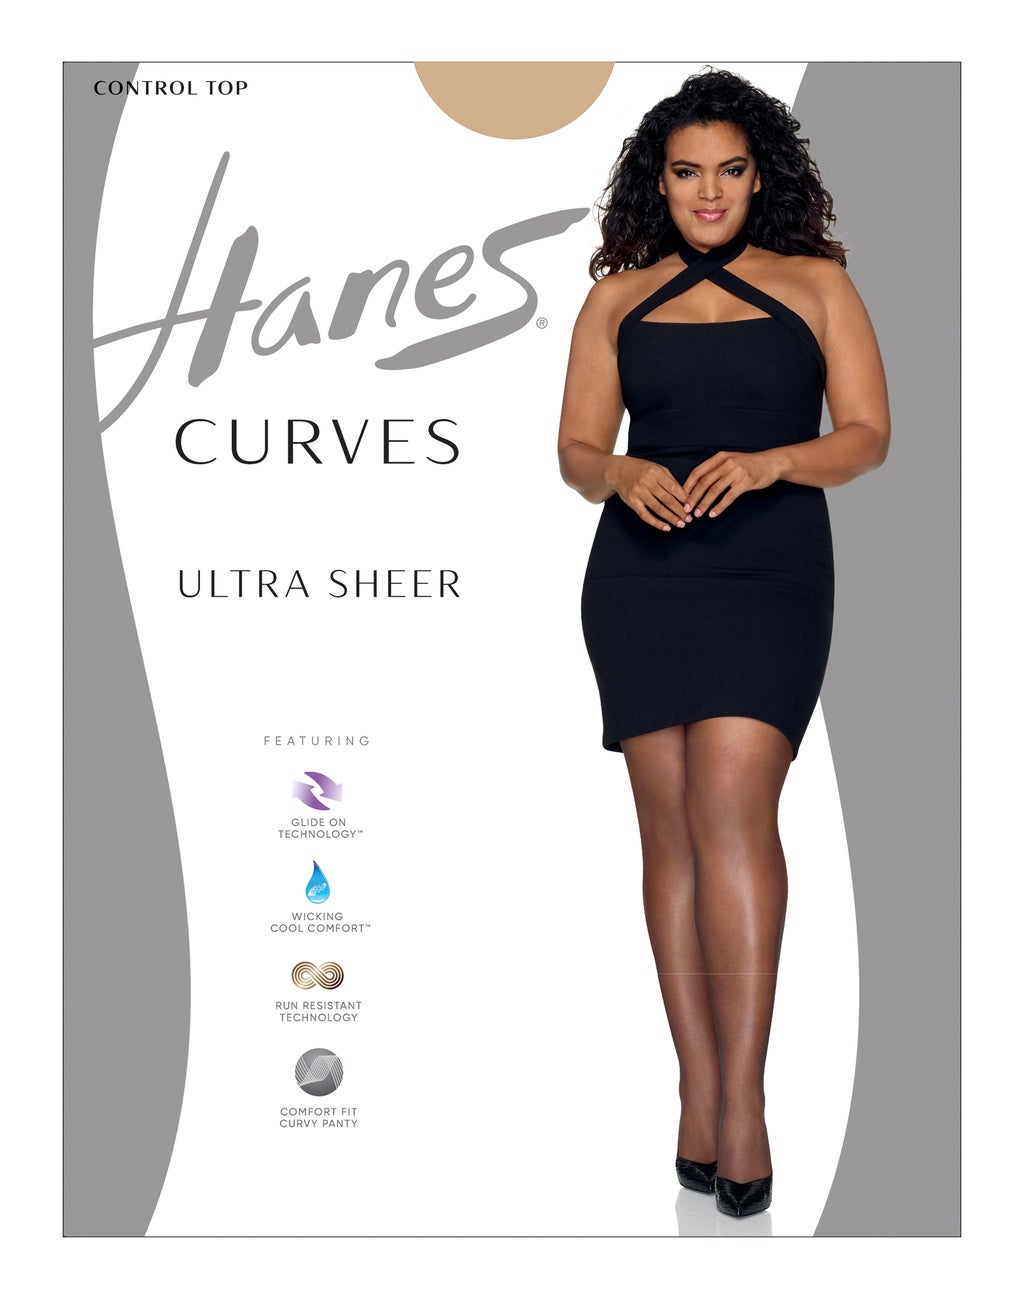 Hanes Curves Ultra Sheer Control Top Legwear $12.00